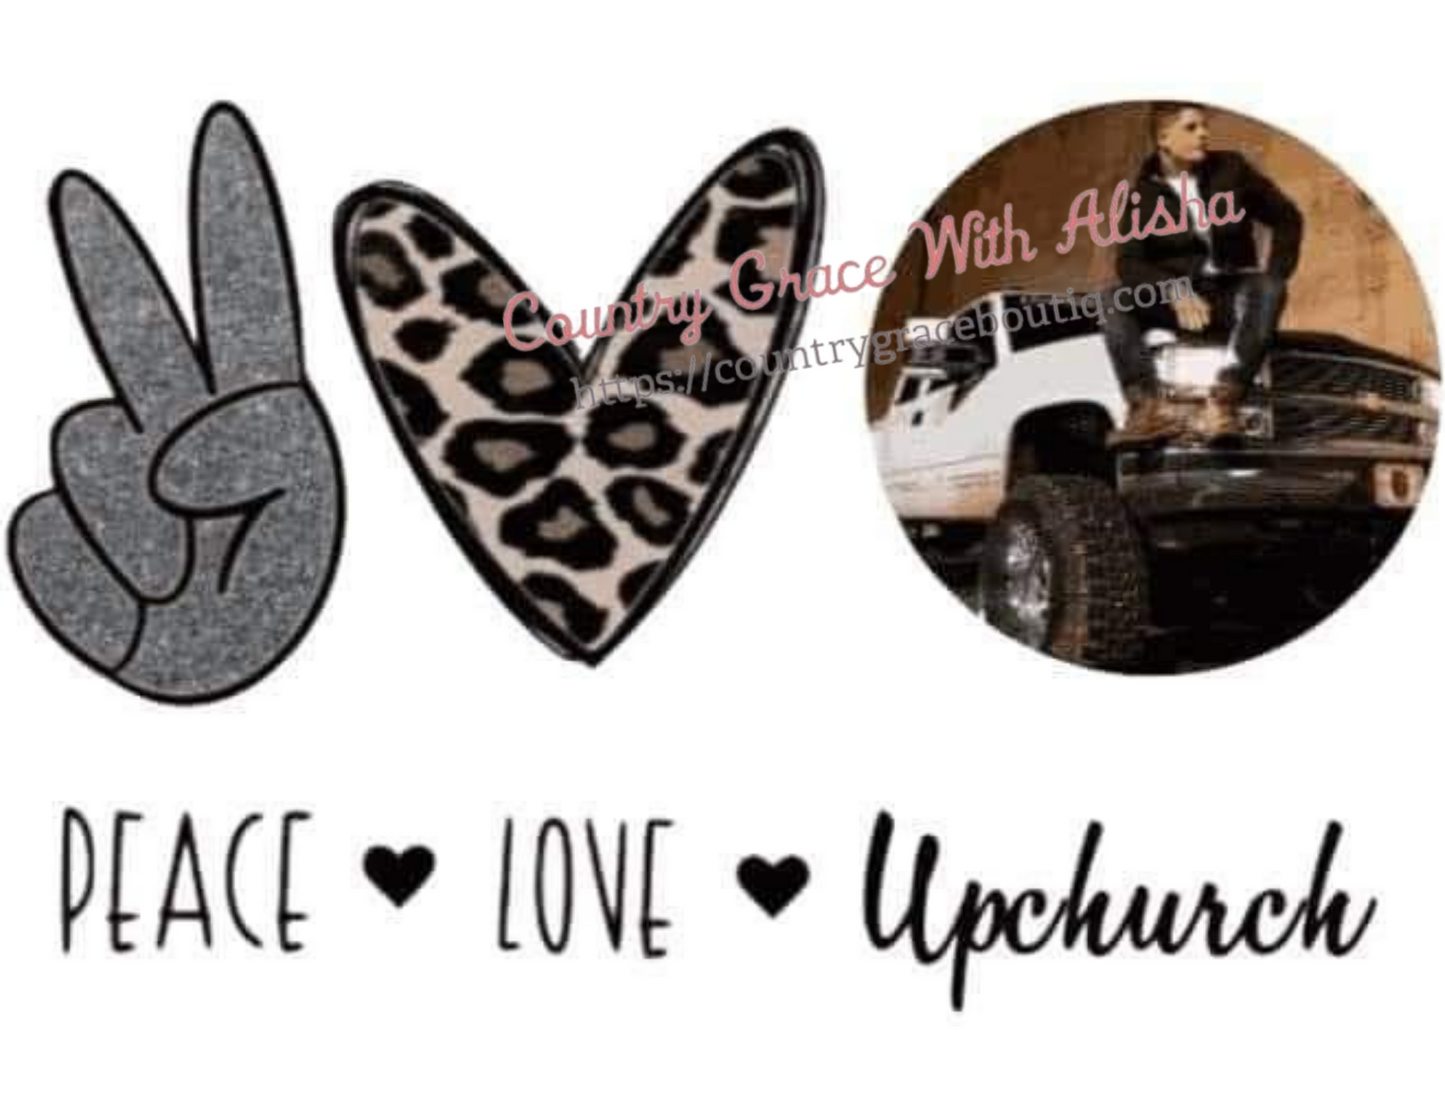 Peace Love Upchurch Ready To Press Sublimation Transfer